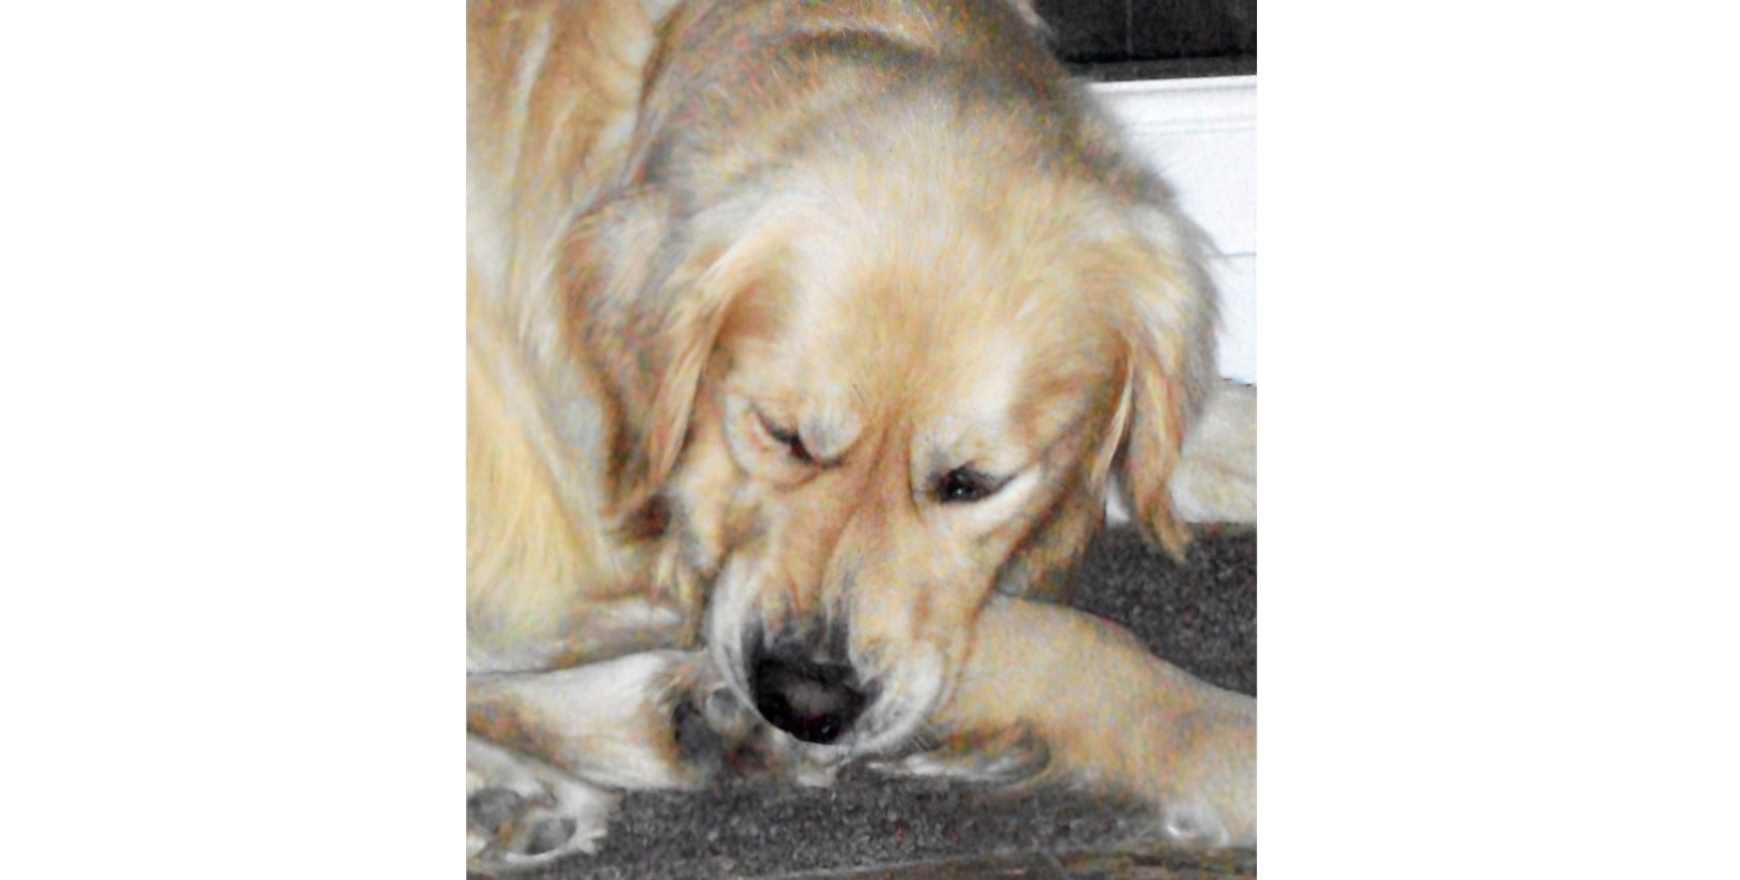 Canine Allergic Dermatitis: Hind Paw Pruritus (not a ‘Habit’!)